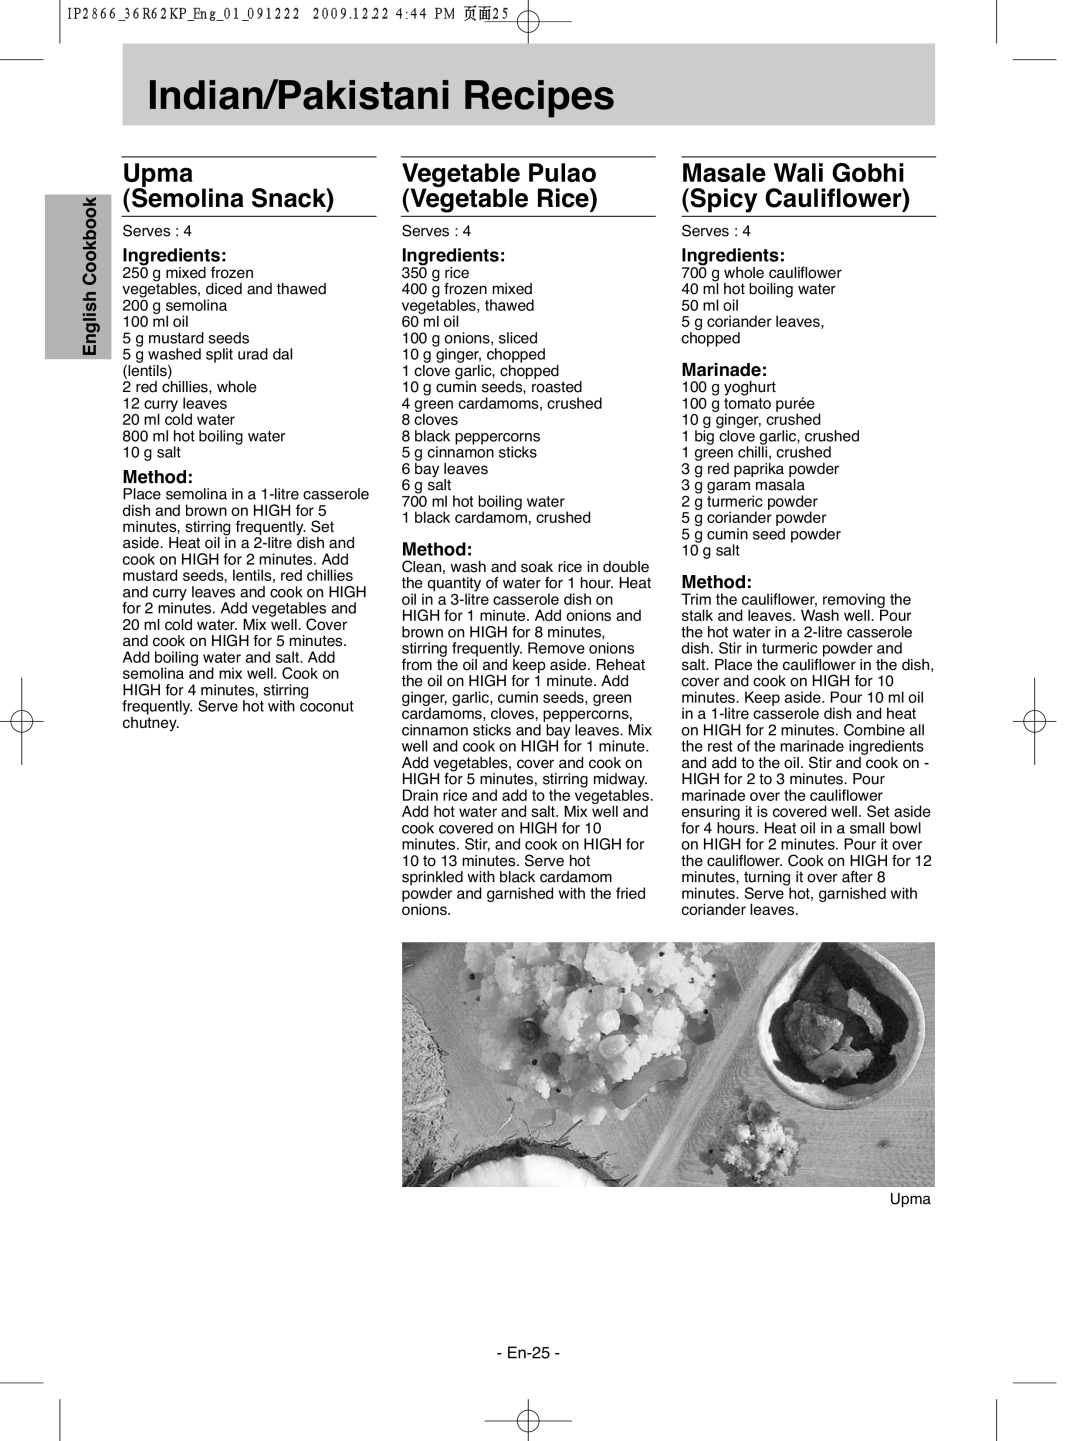 Panasonic NN-G335WF manual Indian/Pakistani Recipes, Upma Semolina Snack, Masale Wali Gobhi Spicy Cauliflower 